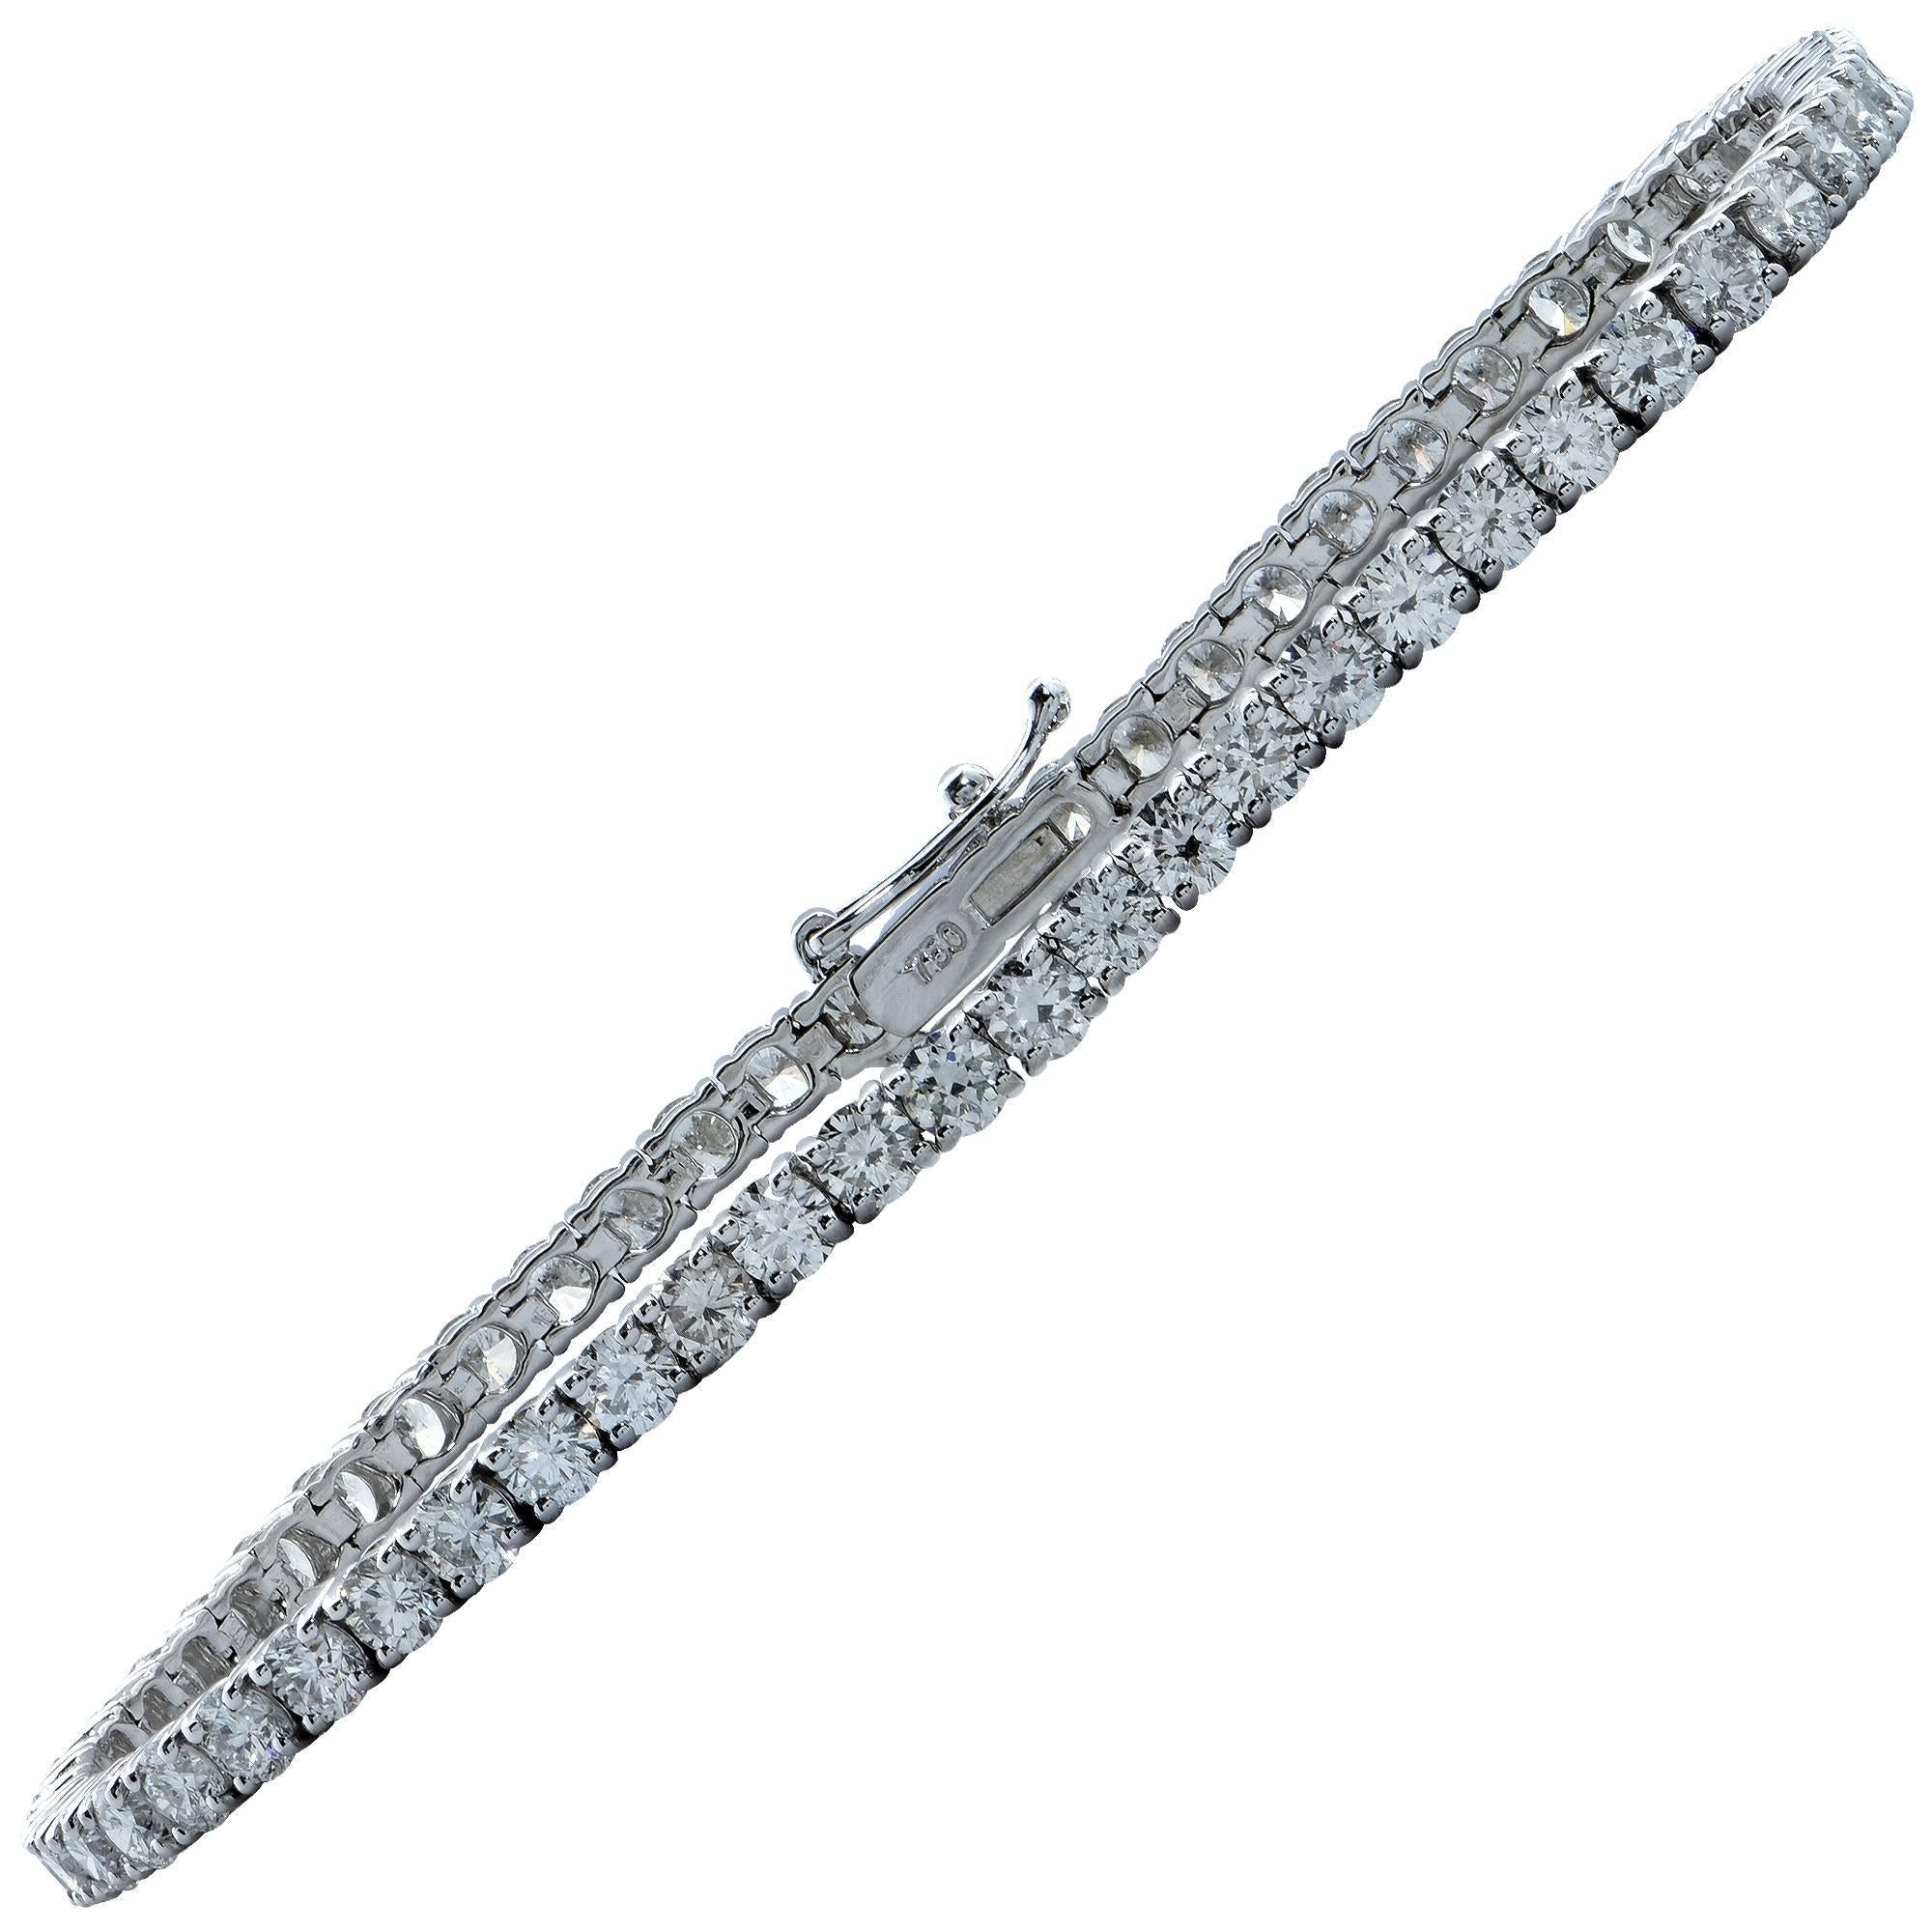 5.24 Carat Diamond Tennis Bracelet